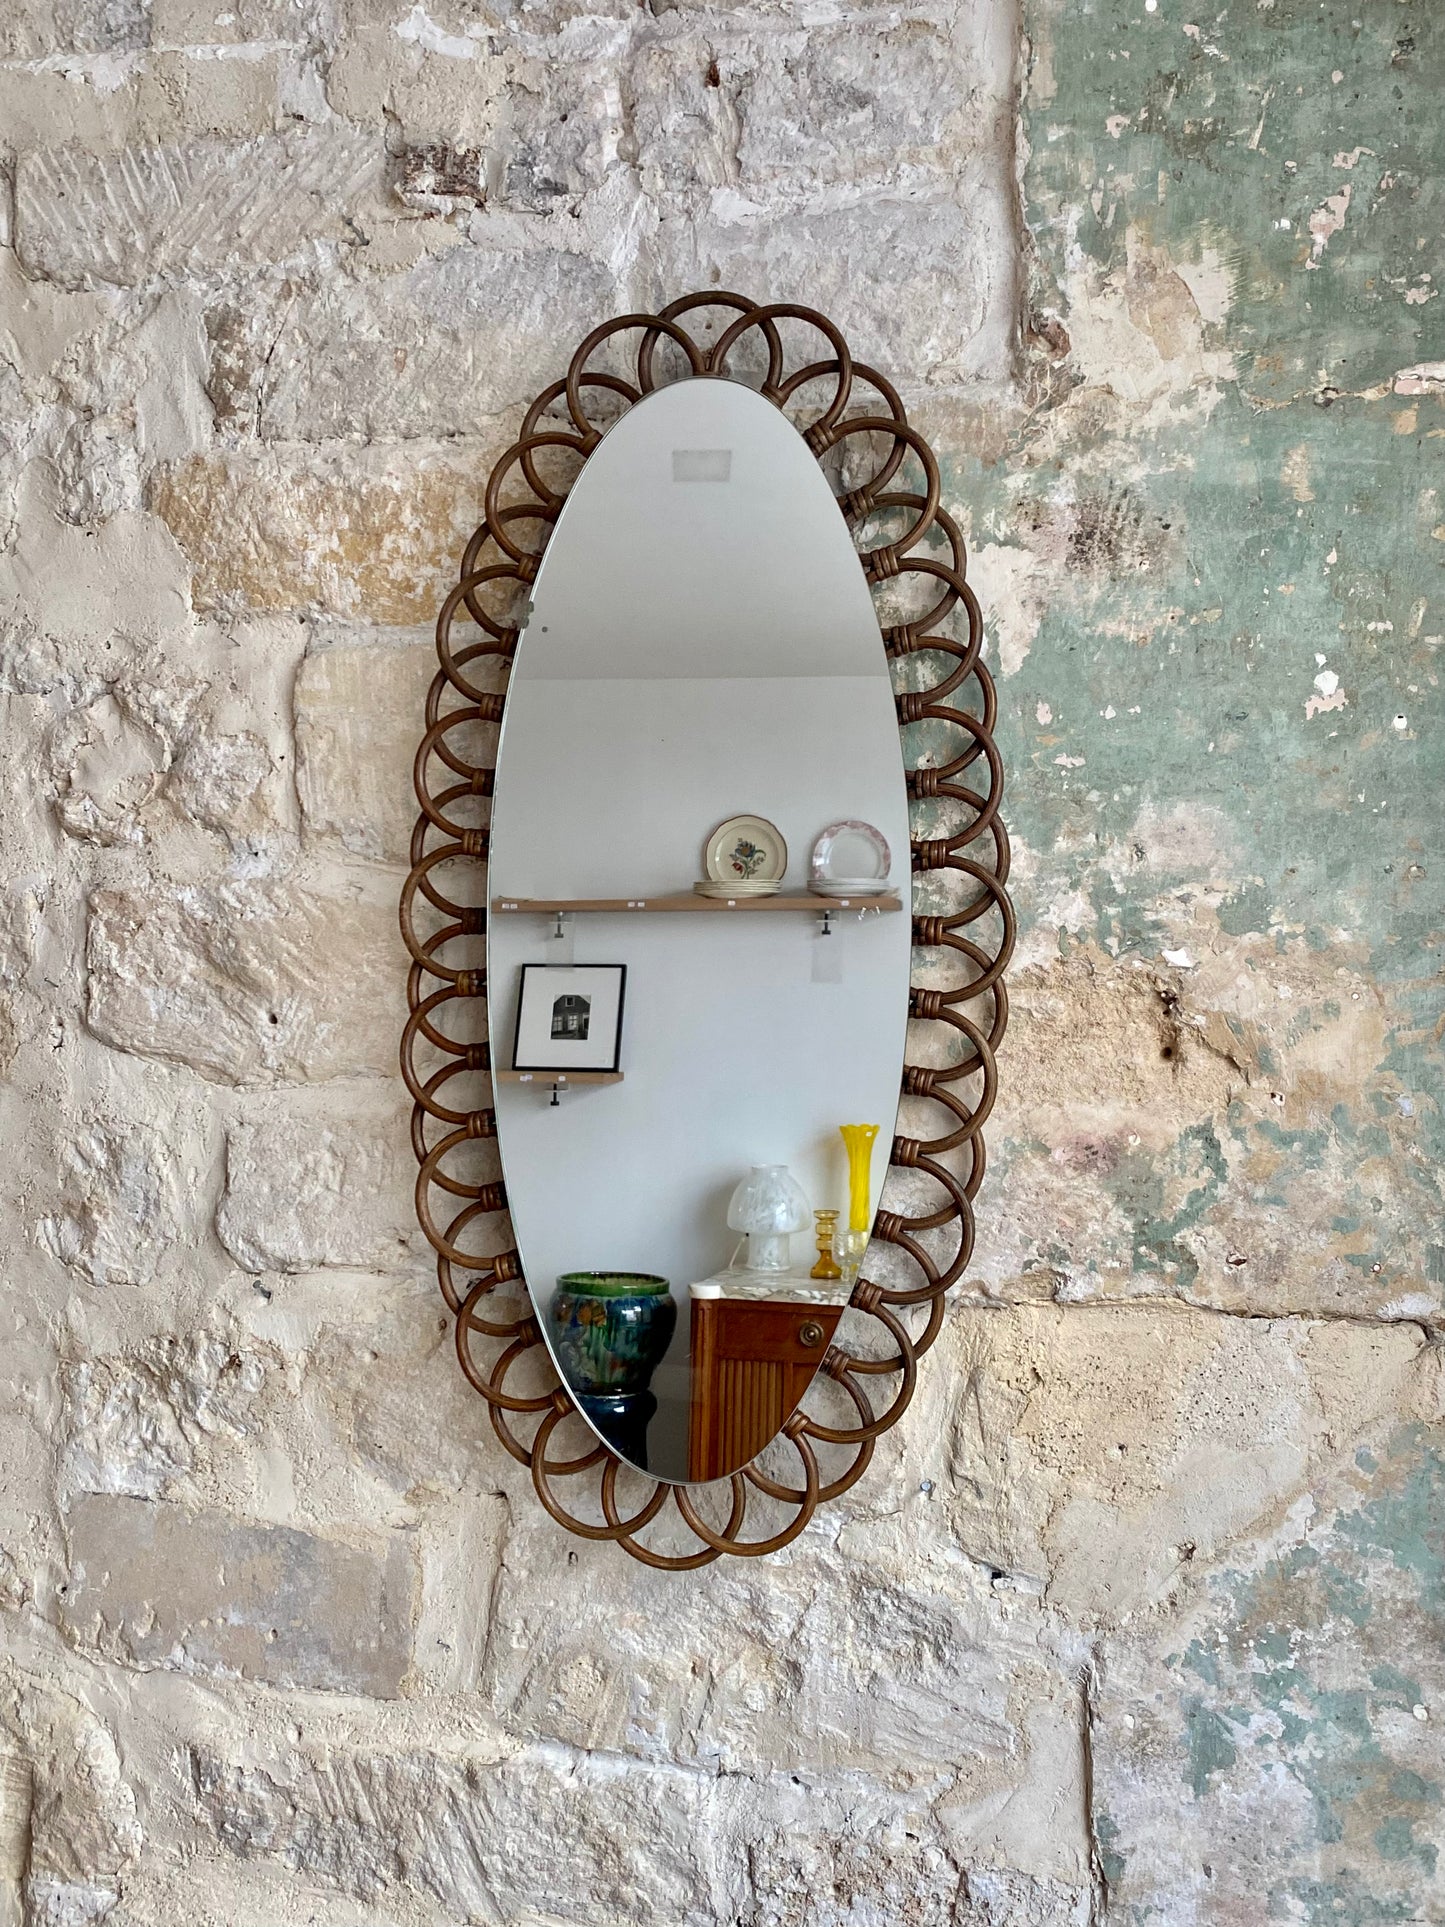 miroir ovale en rotin